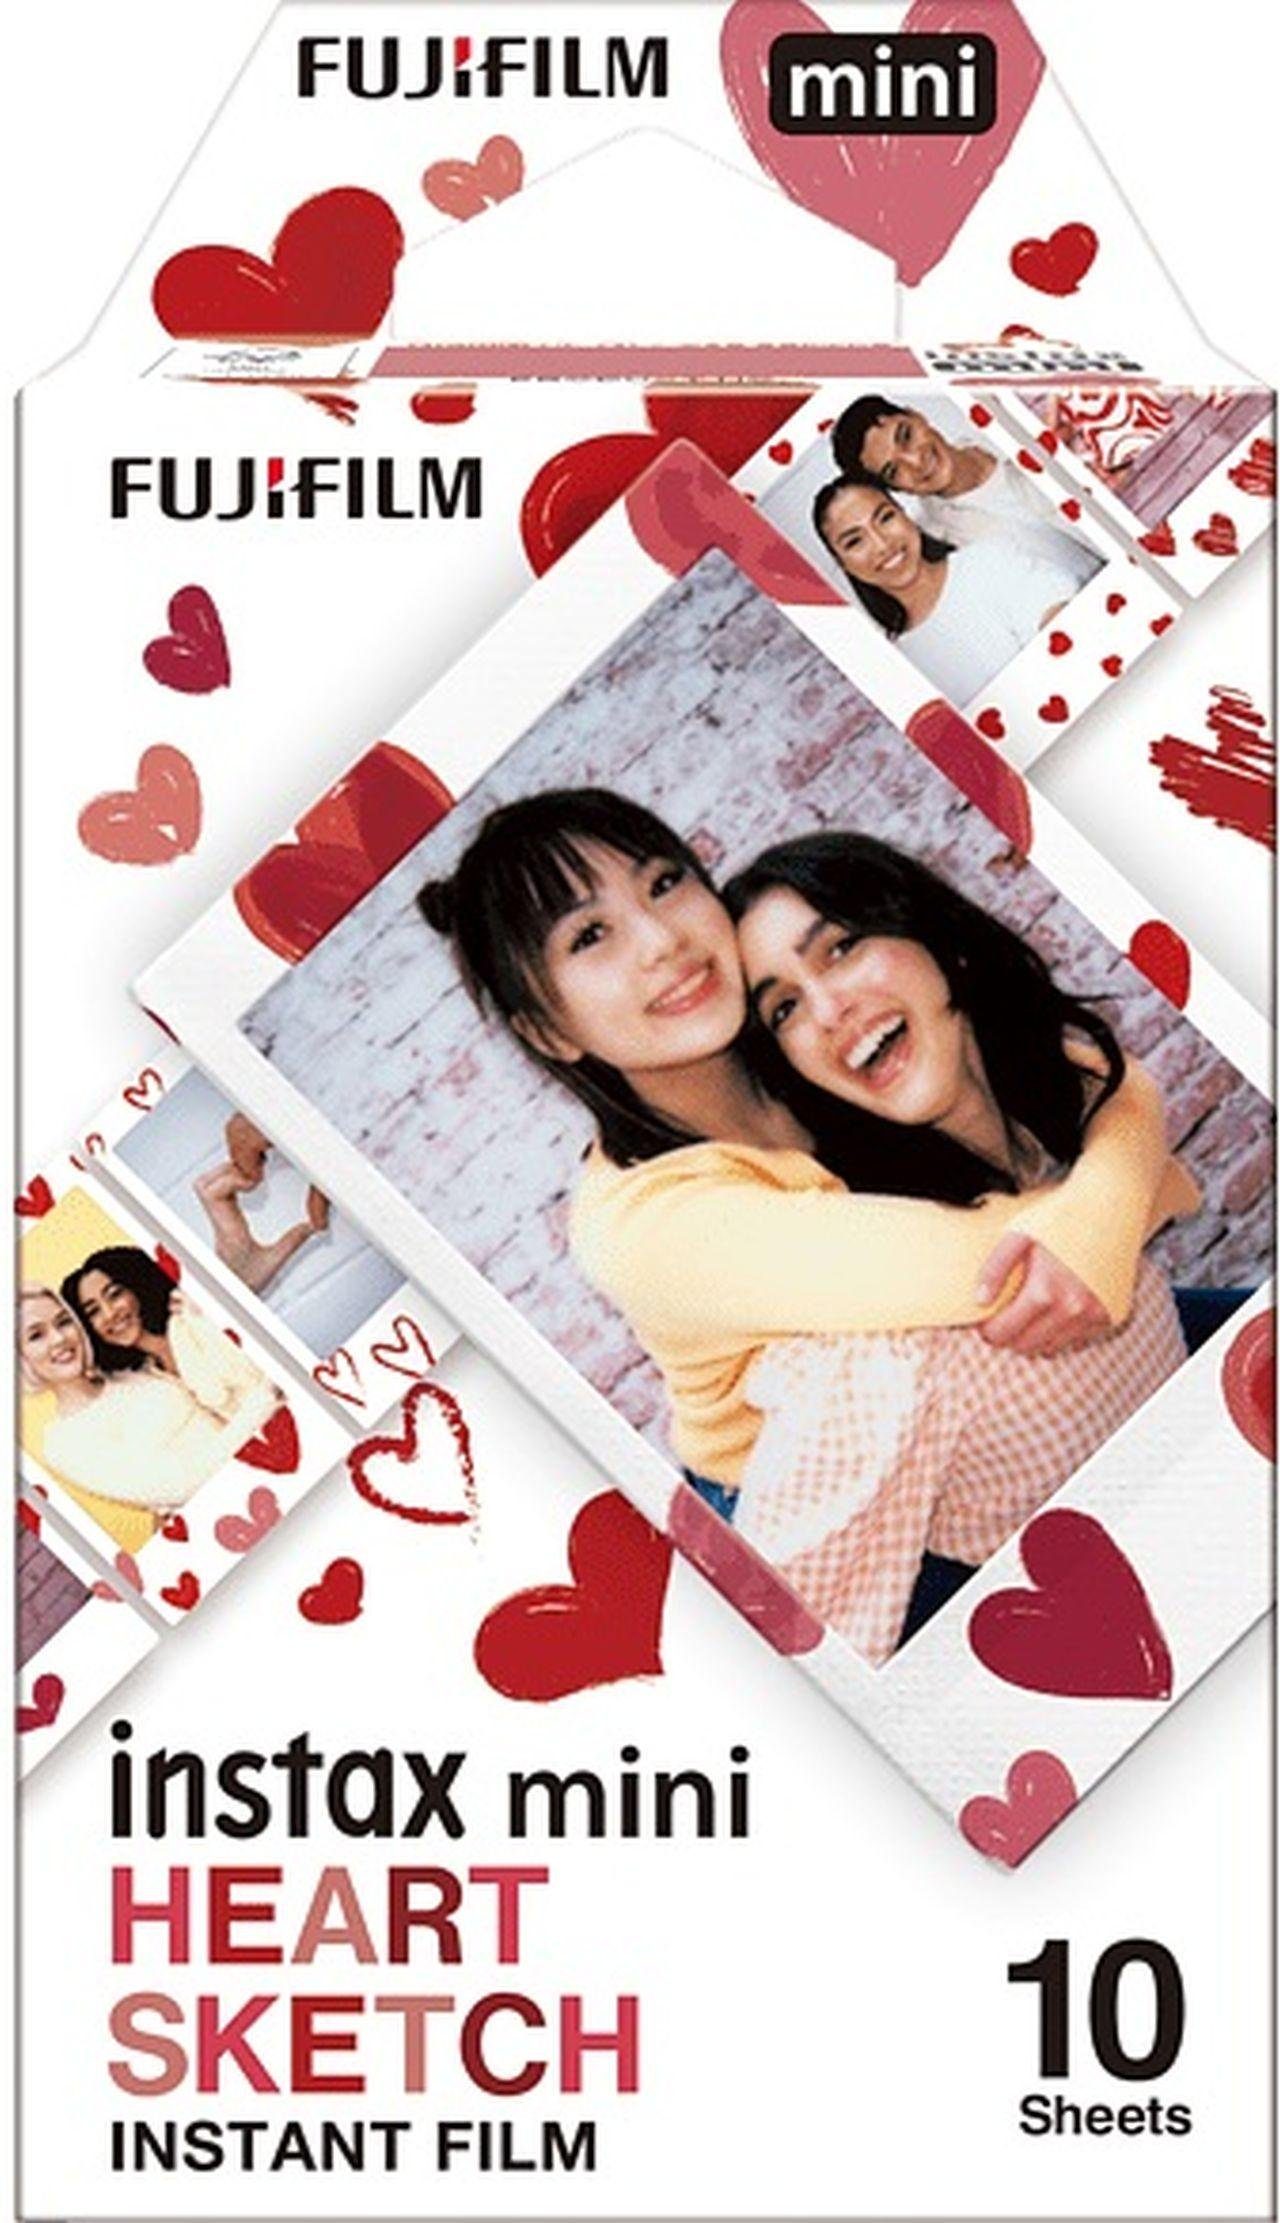 Fujifilm Instax Film Sketch FUJIFILM Sofortbildkamera Mini Heart